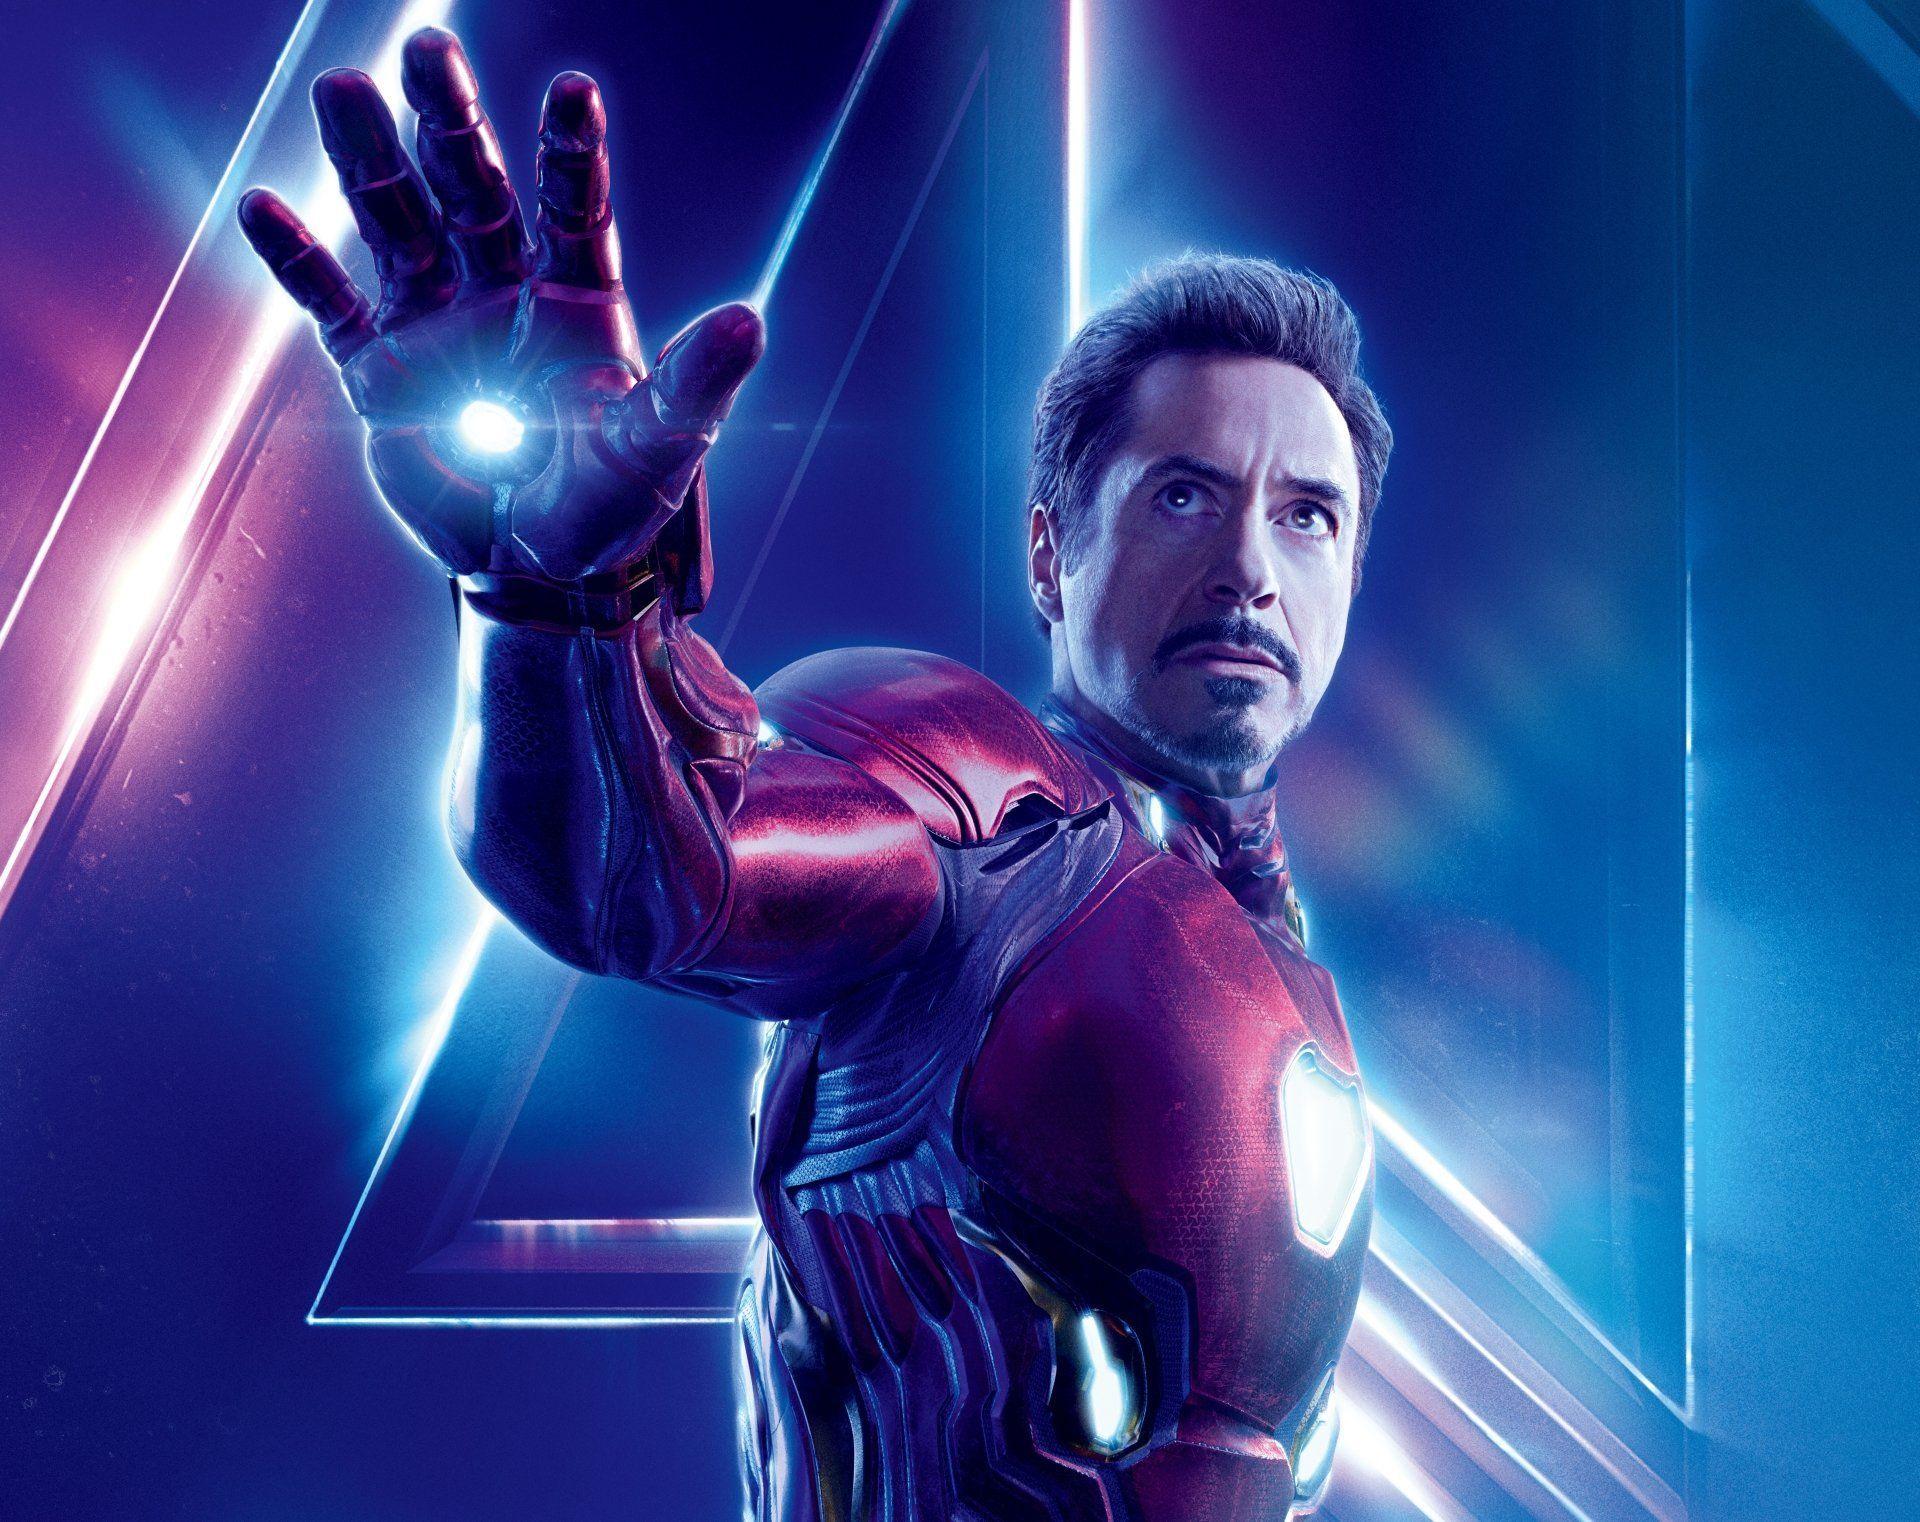 Iron Man Infinity War 4k Wallpapers Top Free Iron Man Infinity War 4k Backgrounds Wallpaperaccess